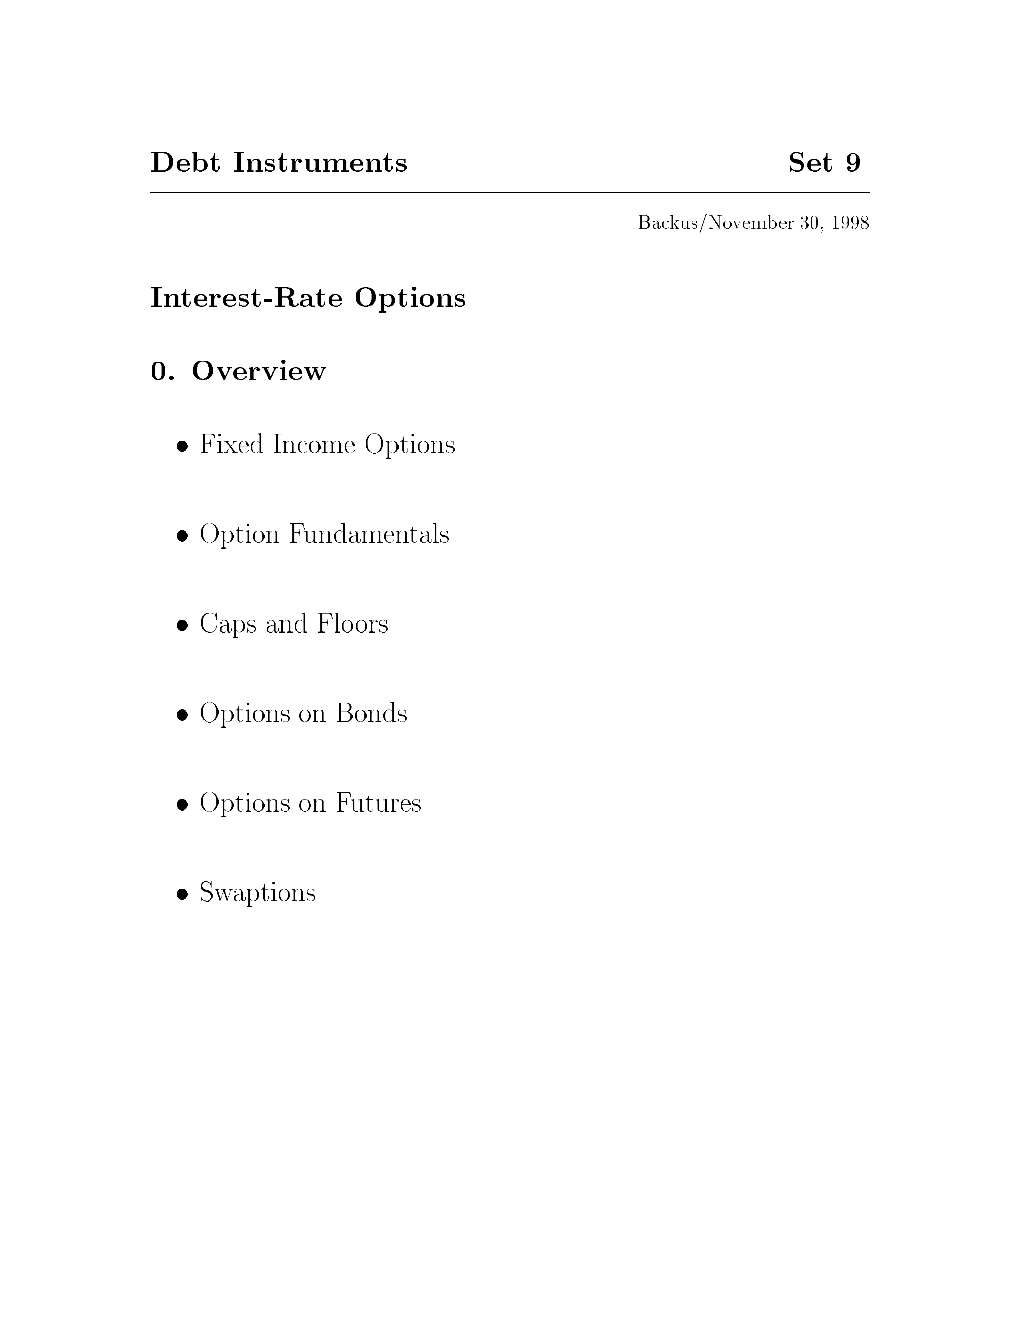 Debt Instruments Set 9 Interest-Rate Options 0. Overview